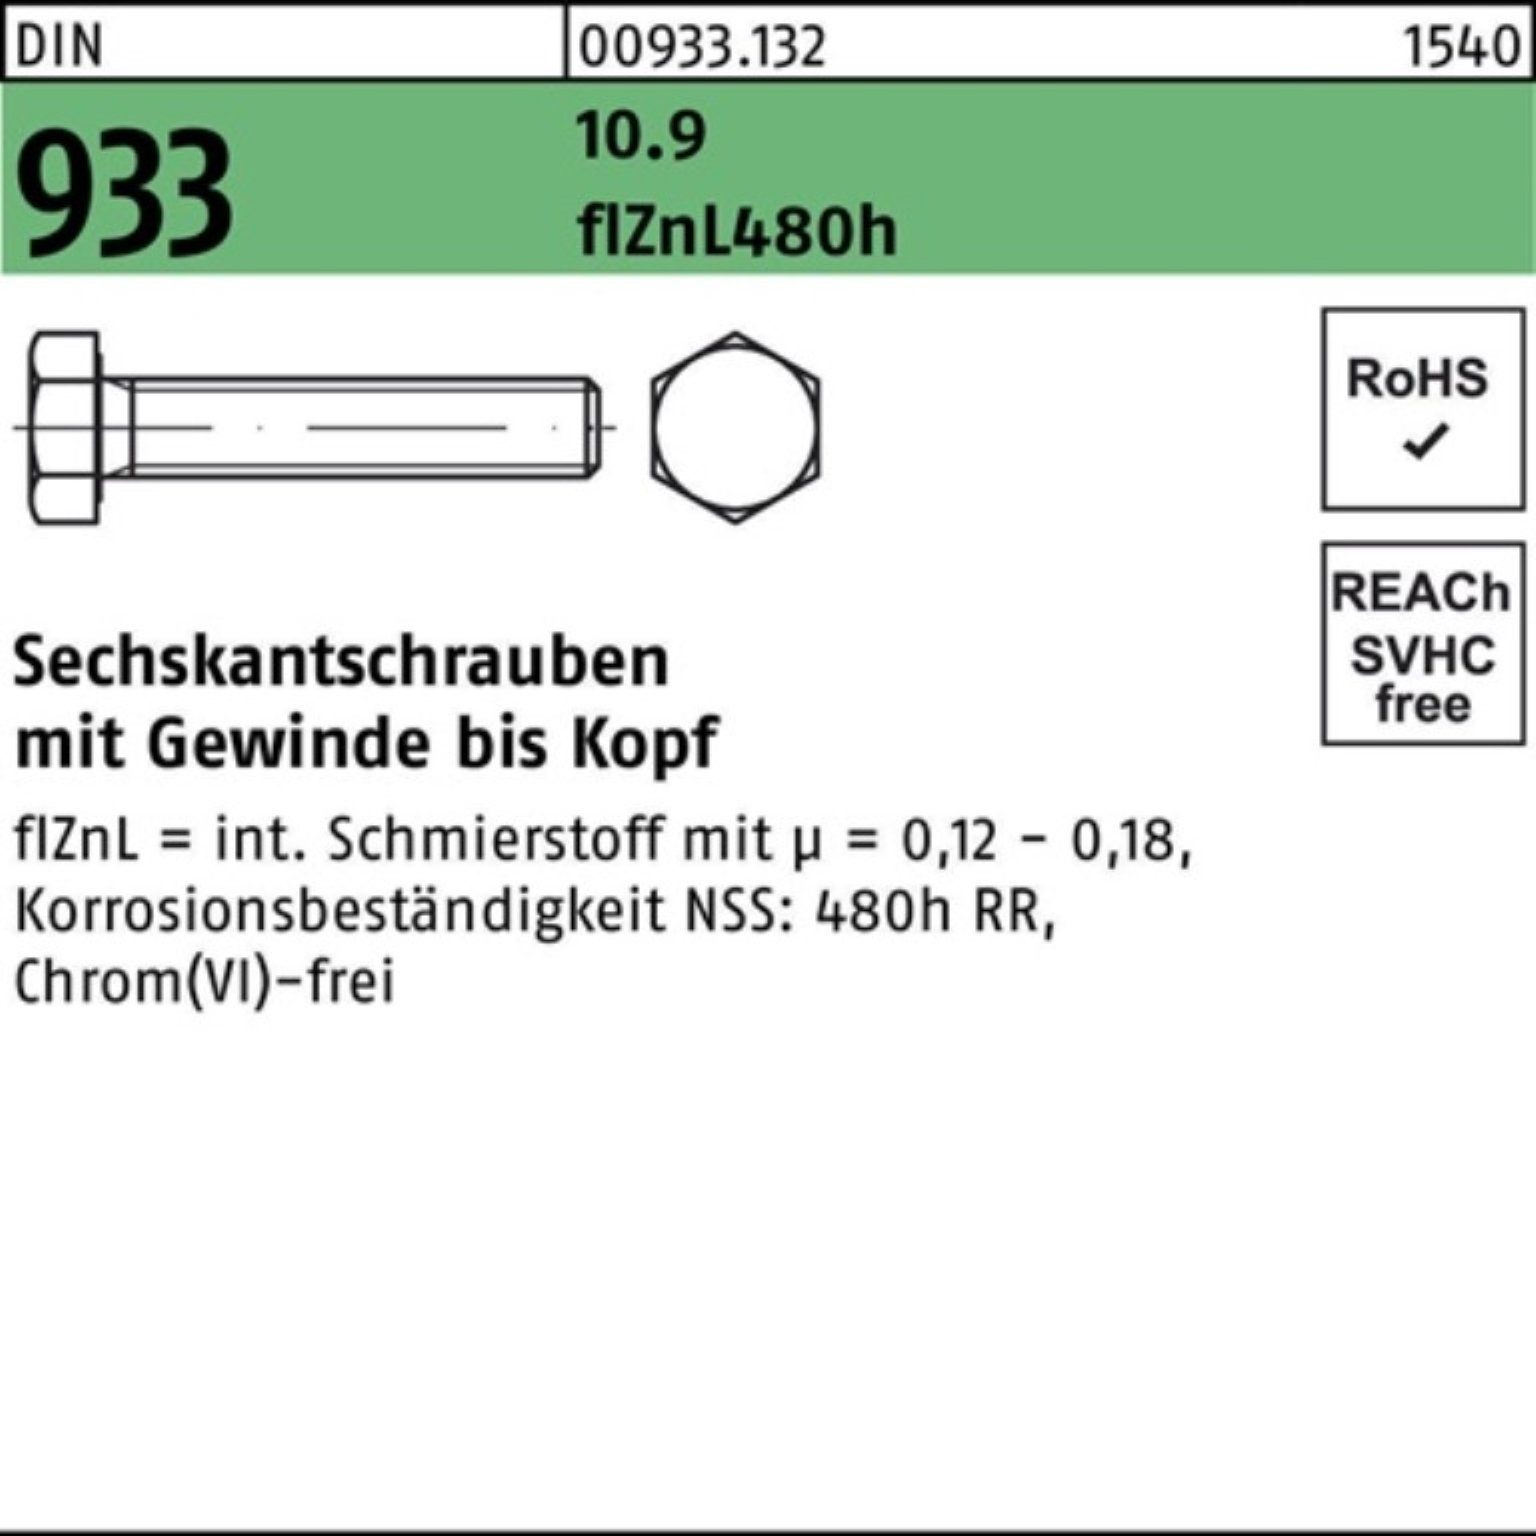 Sechskantschraube Sechskantschraube 100er 120 flZnL/nc/x/x/480 DIN 10.9 Reyher M24x 933 Pack VG